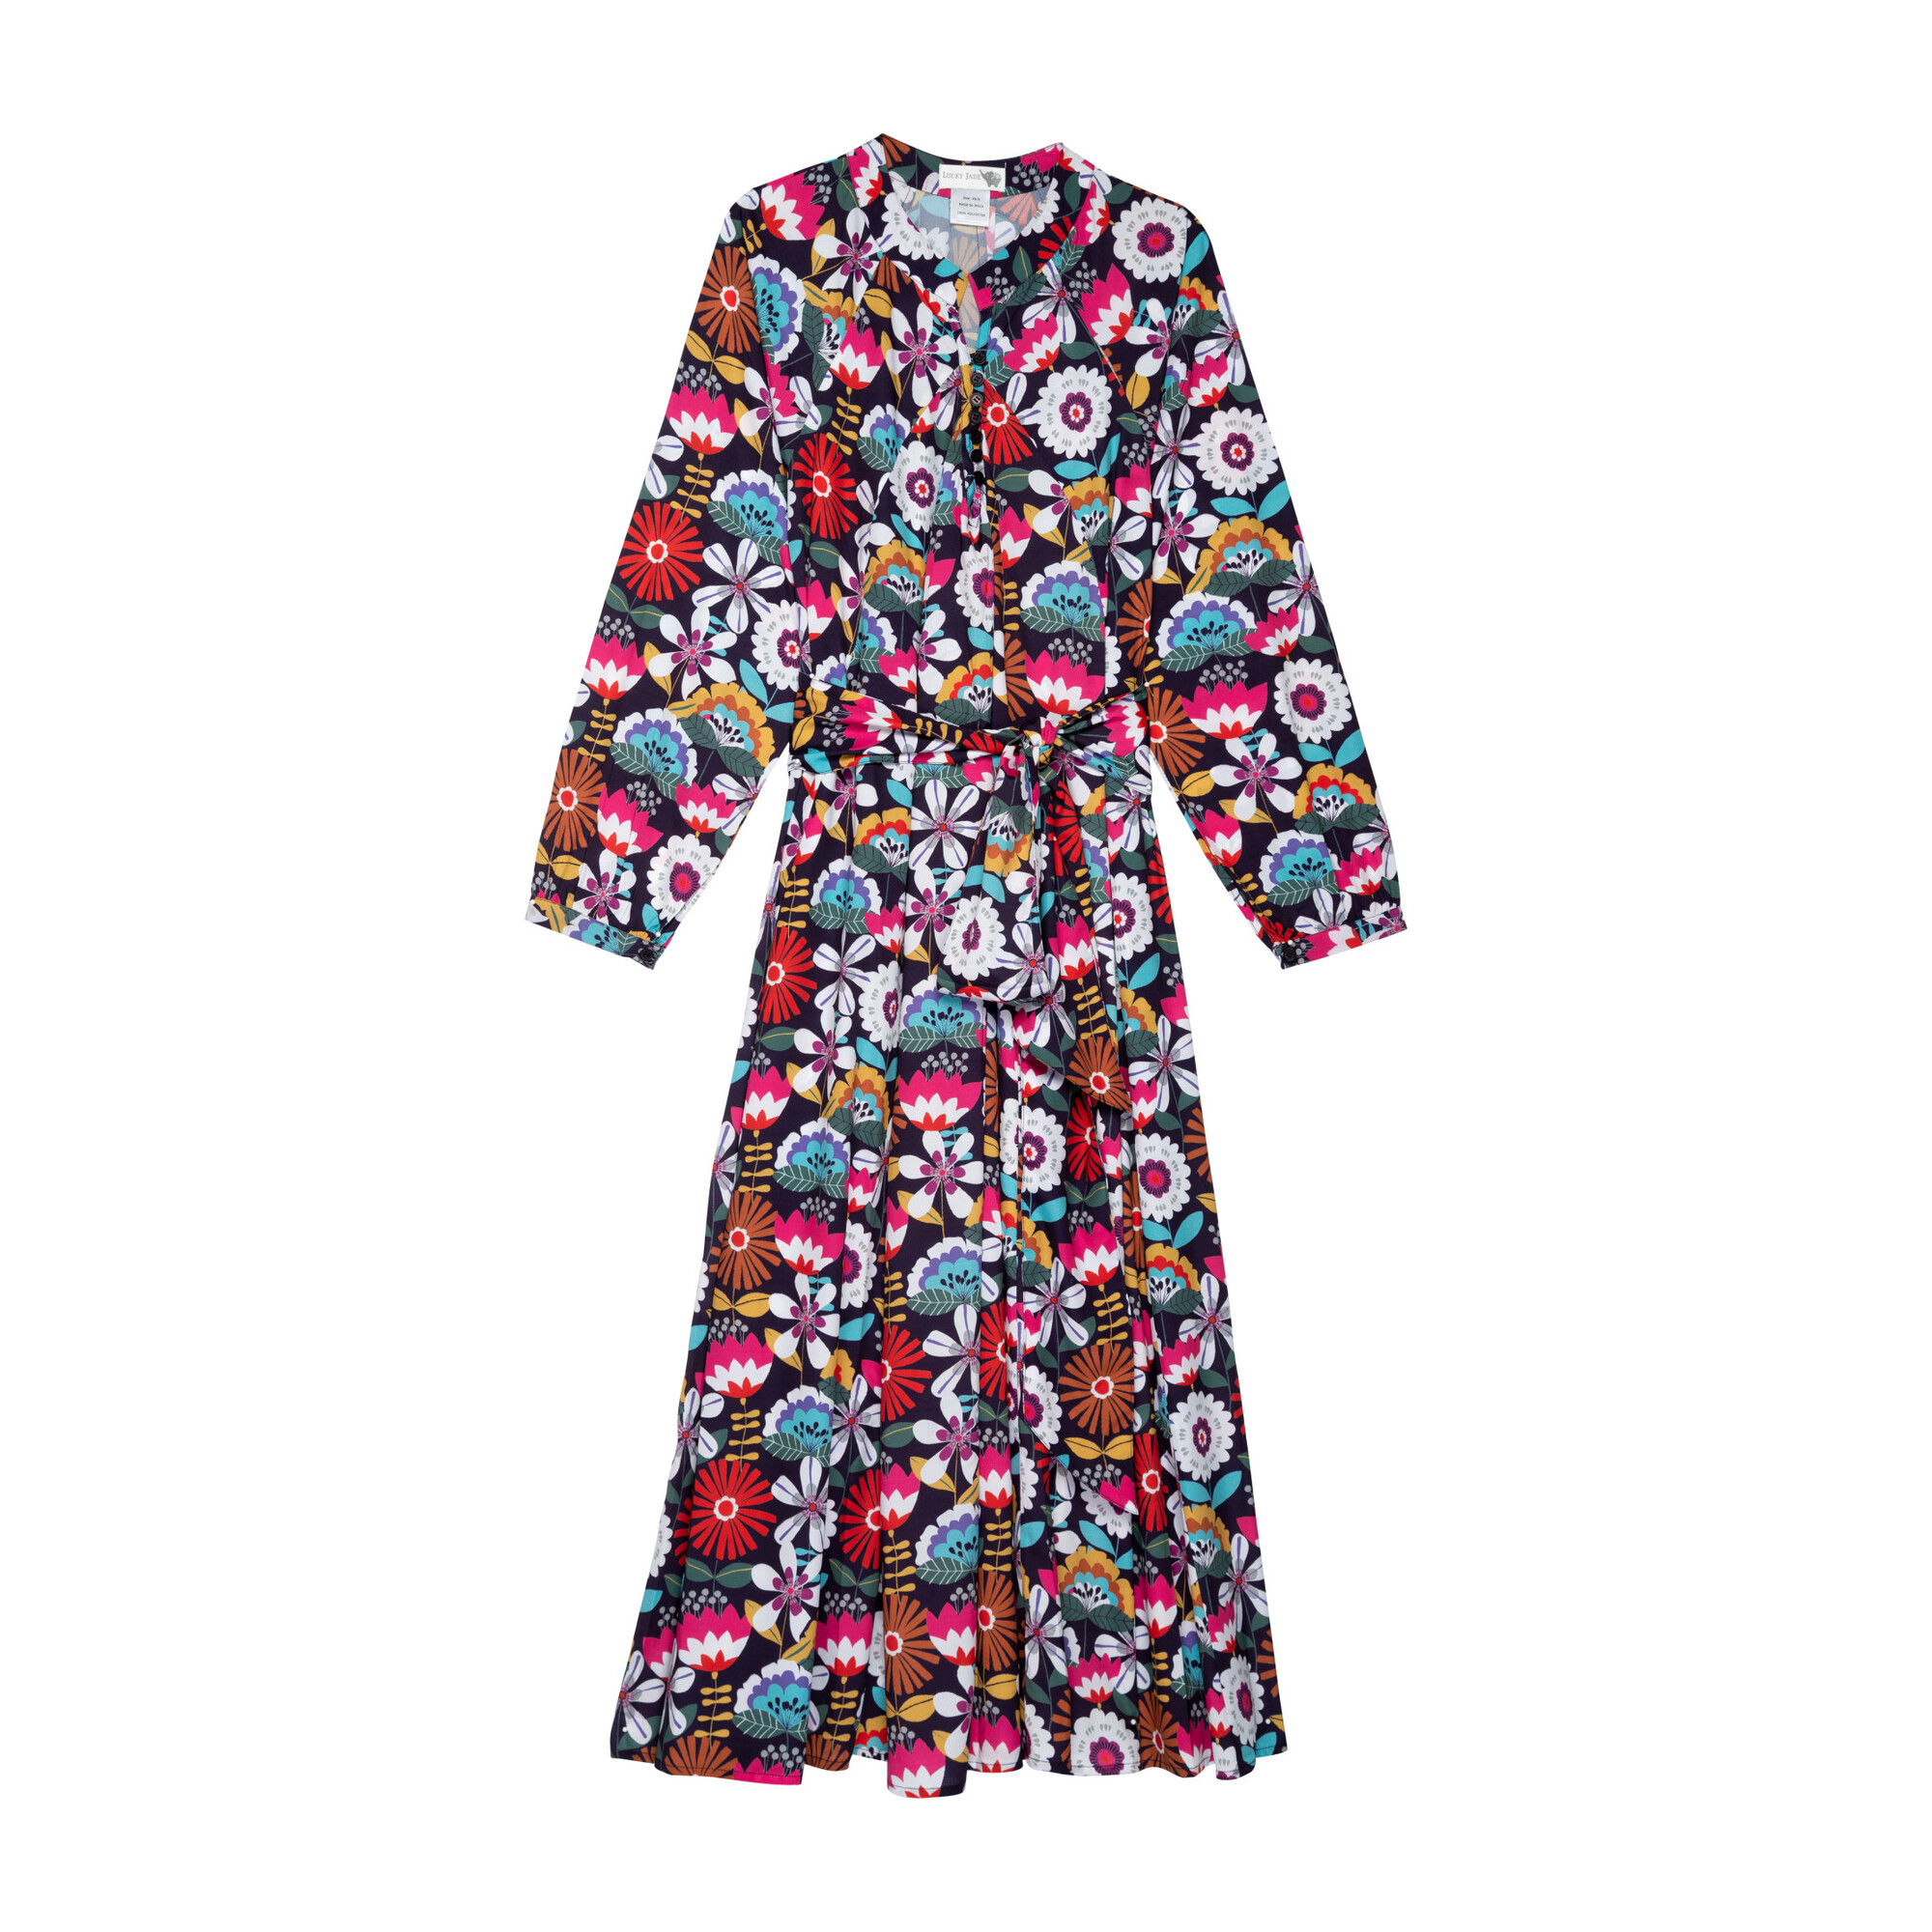 Women's Annika's Dress, Flowers - What's New Shops Mommy & Me Shop ...